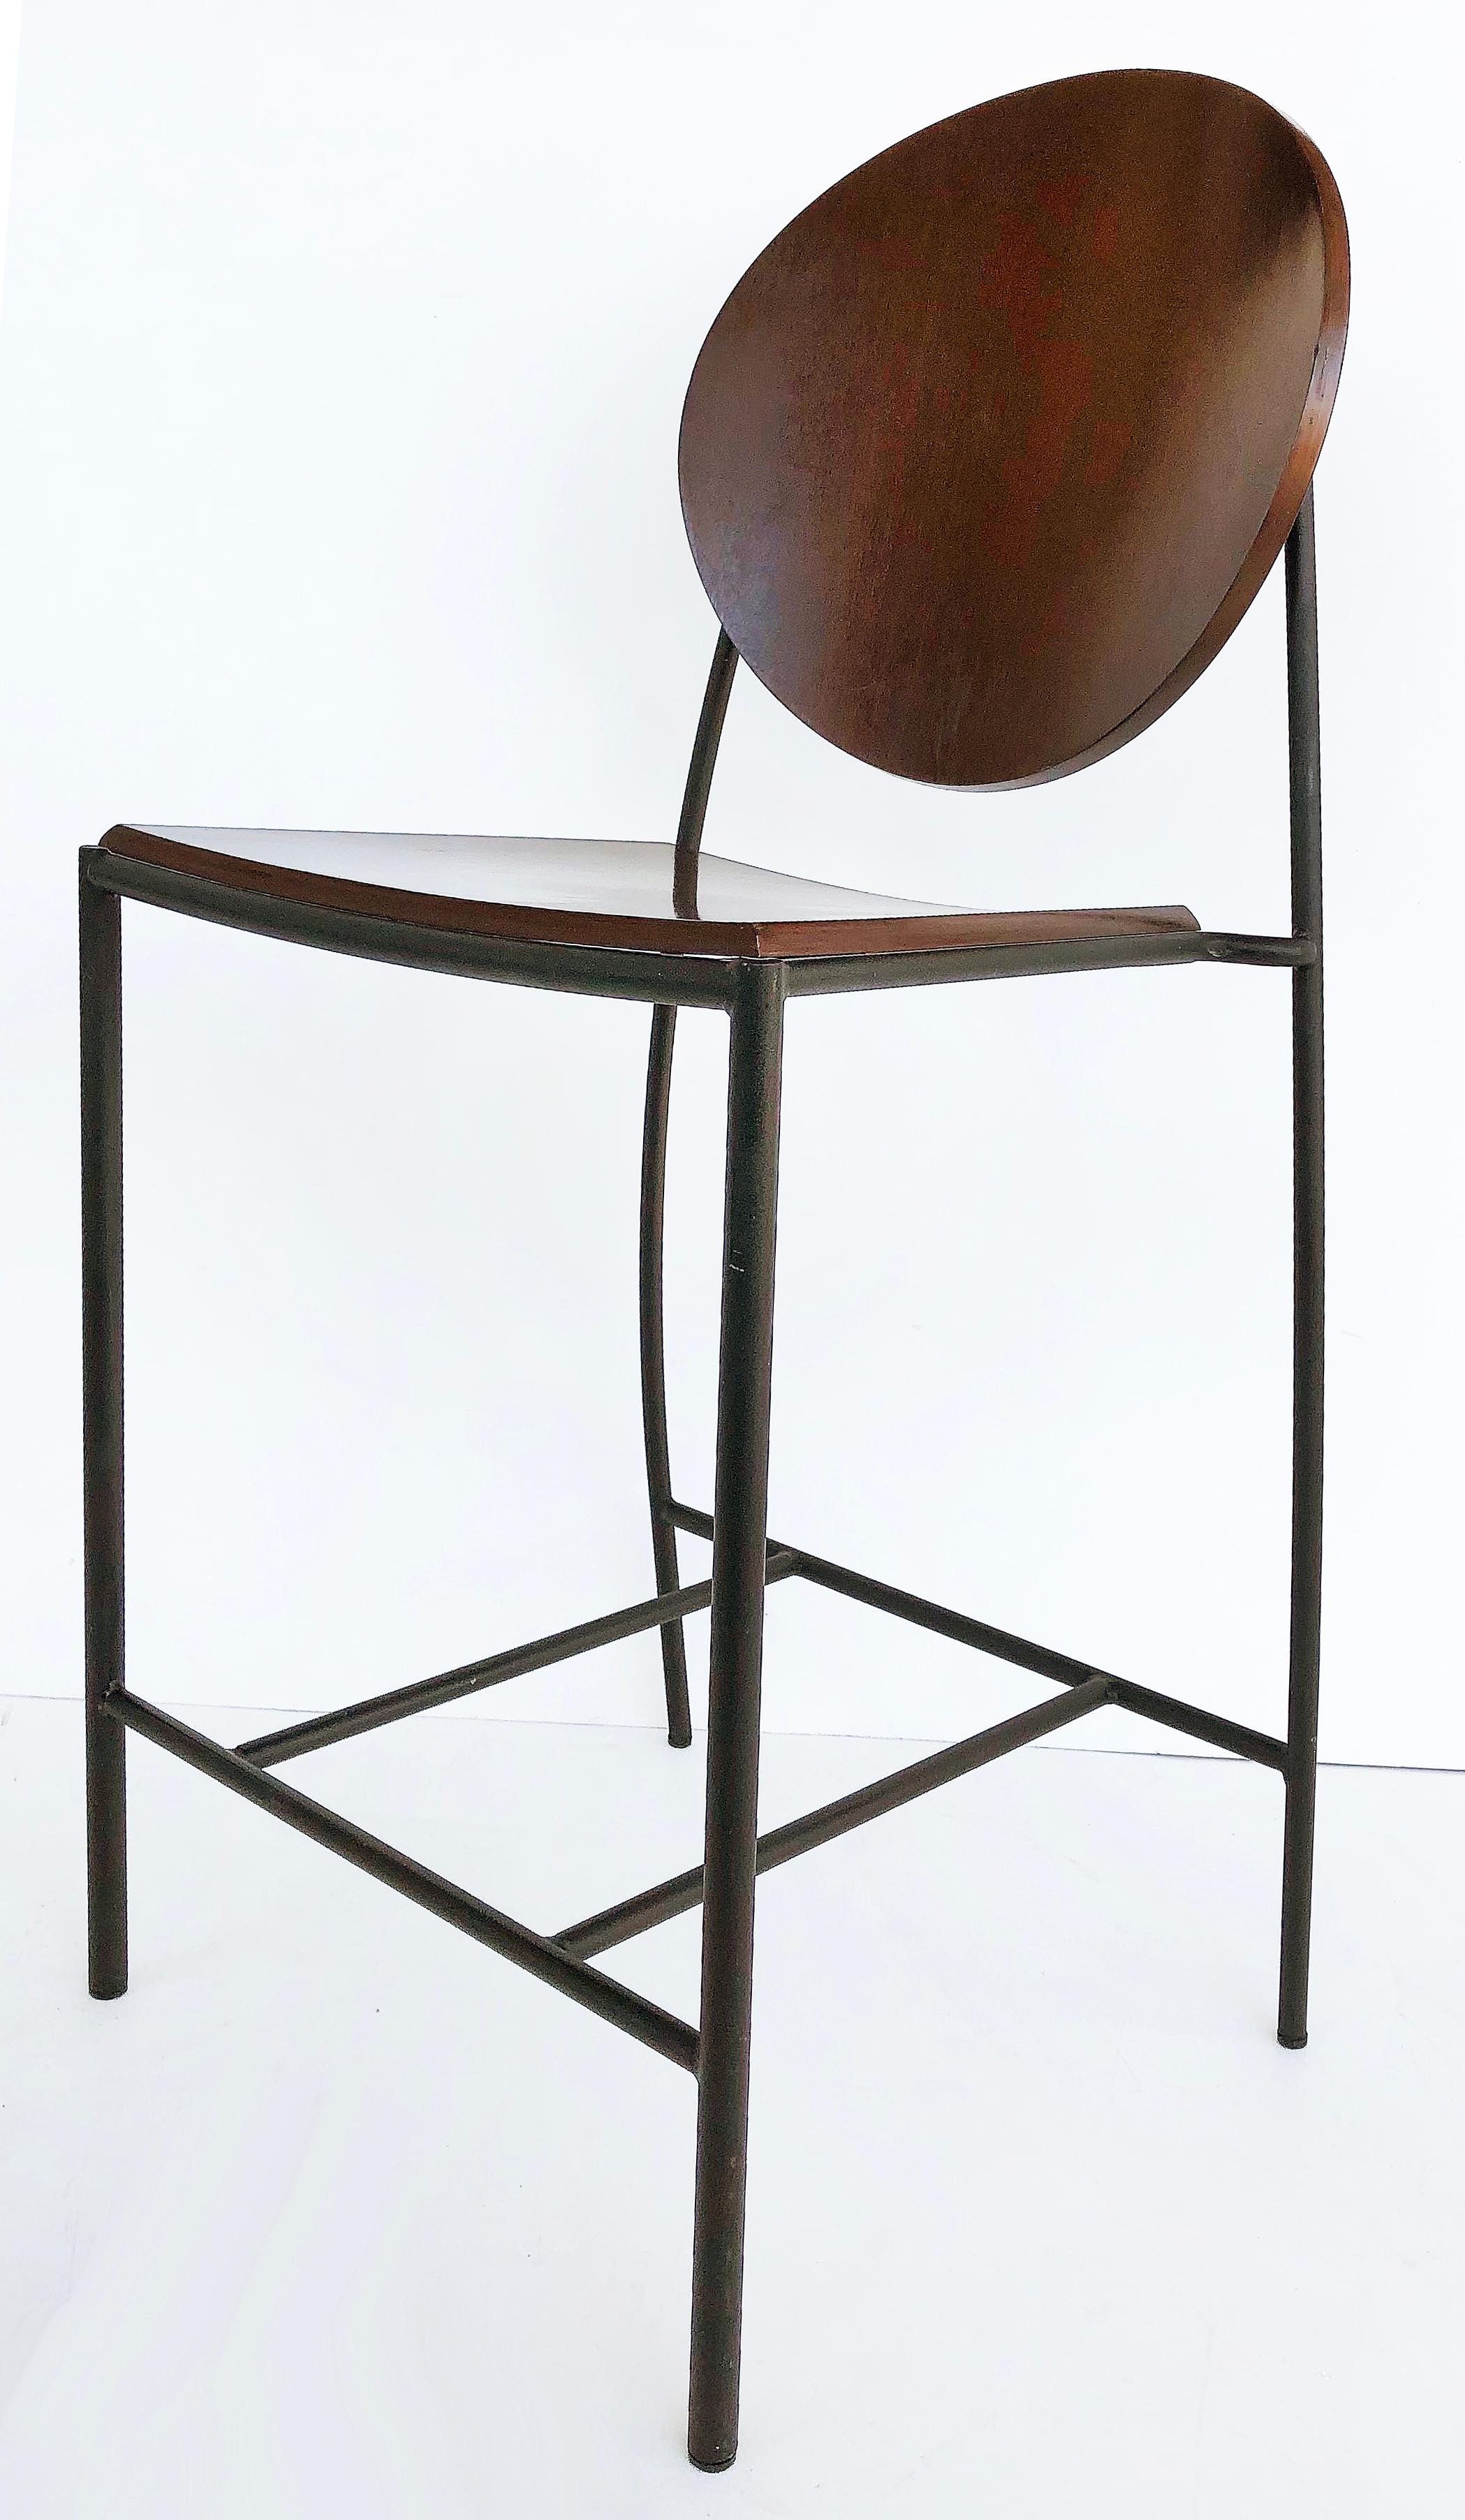 Dakota Jackson vik-tor 2 wood / iron counter stools, set of 3

Offered for sale is a set of three Dakota Jackson 